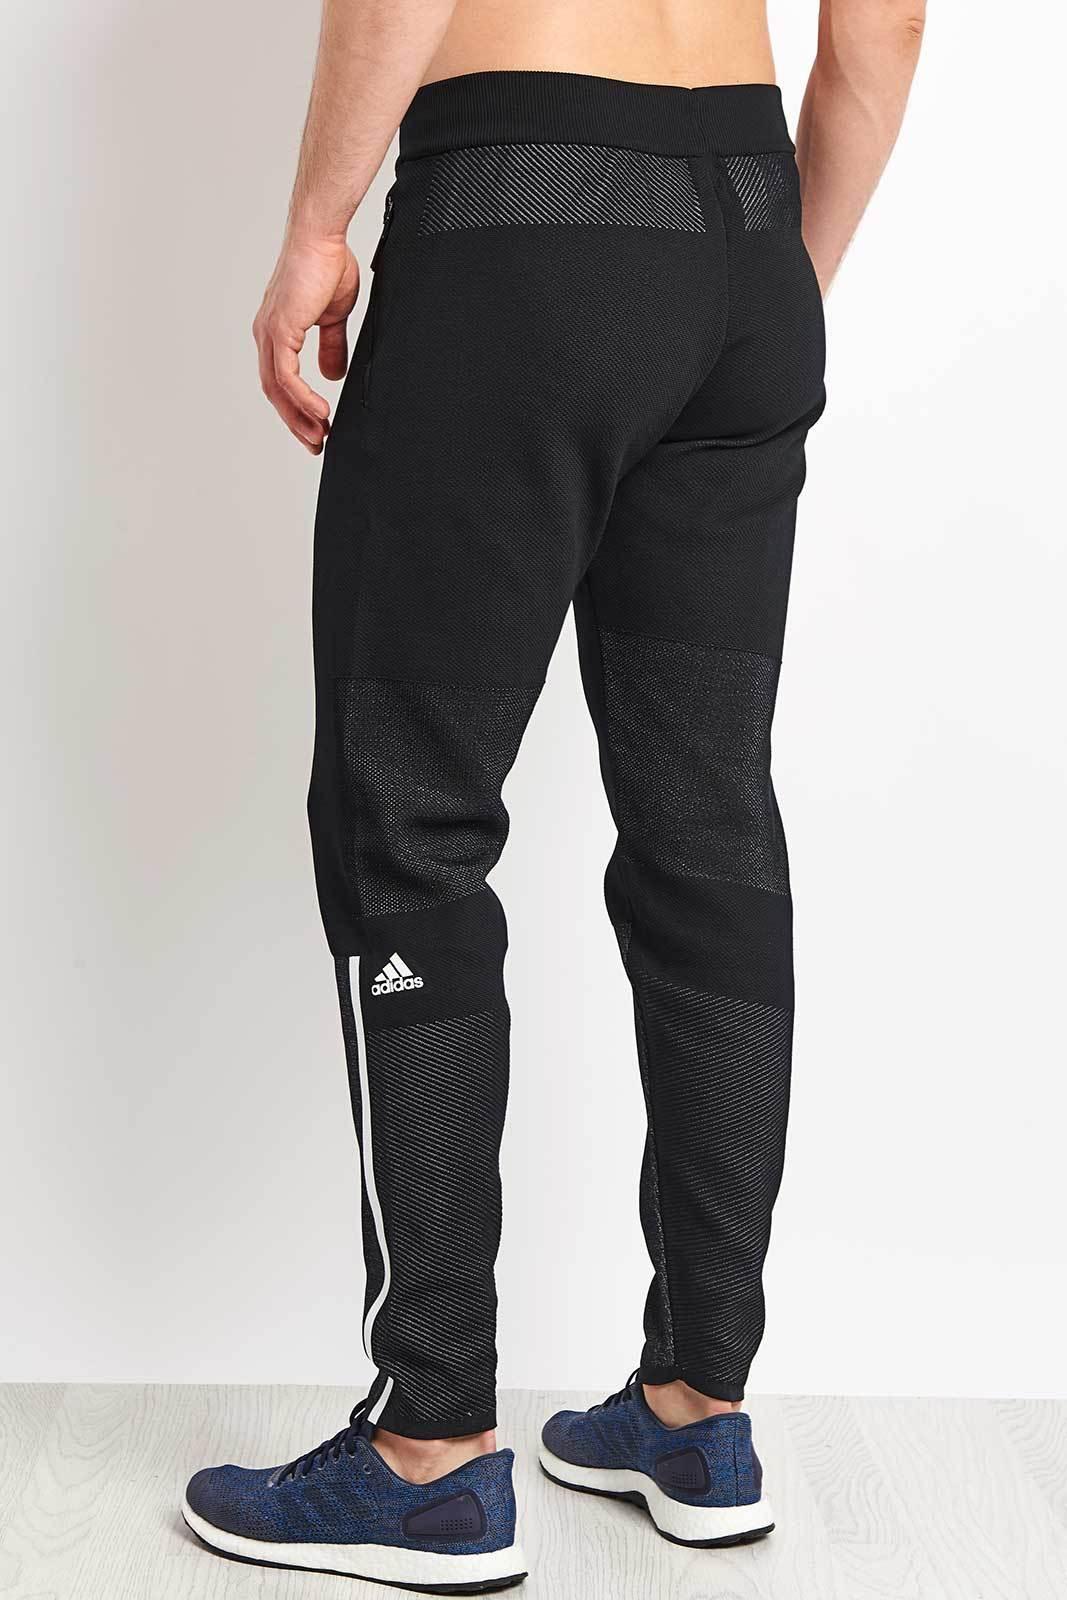 adidas Synthetic Z.n.e. Primeknit Pants in Black for Men - Lyst